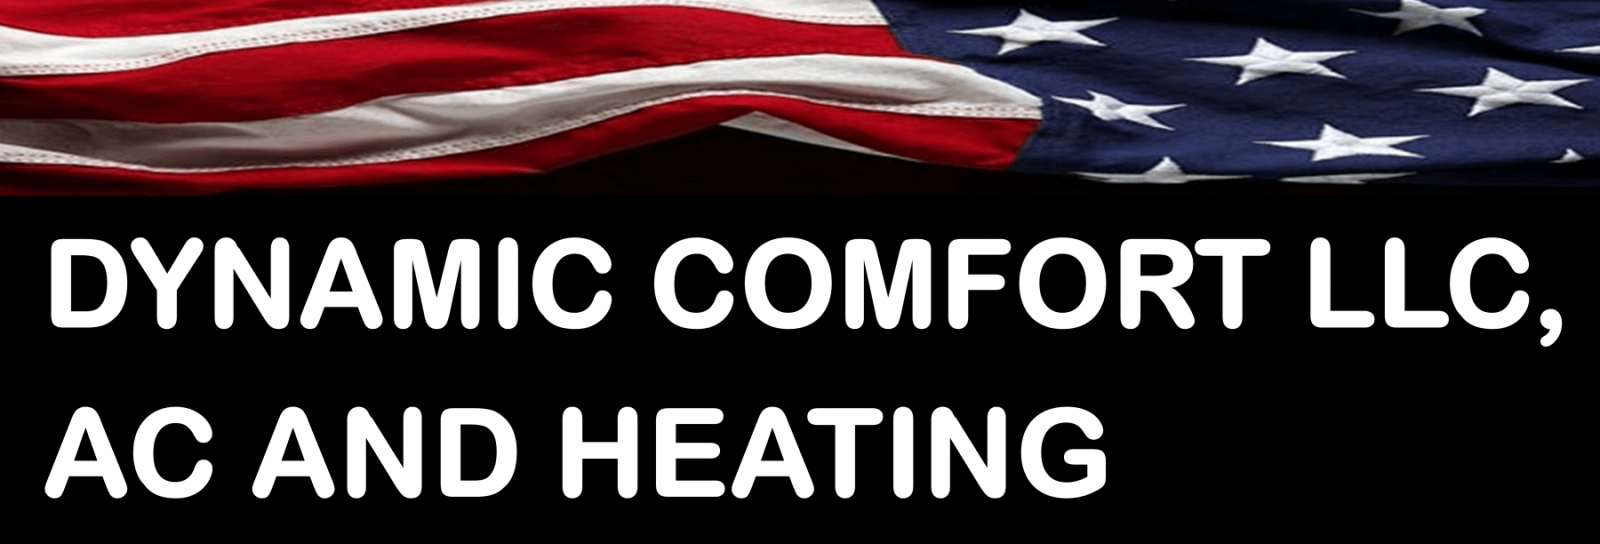 Dynamic Comfort Llc A C And Heating